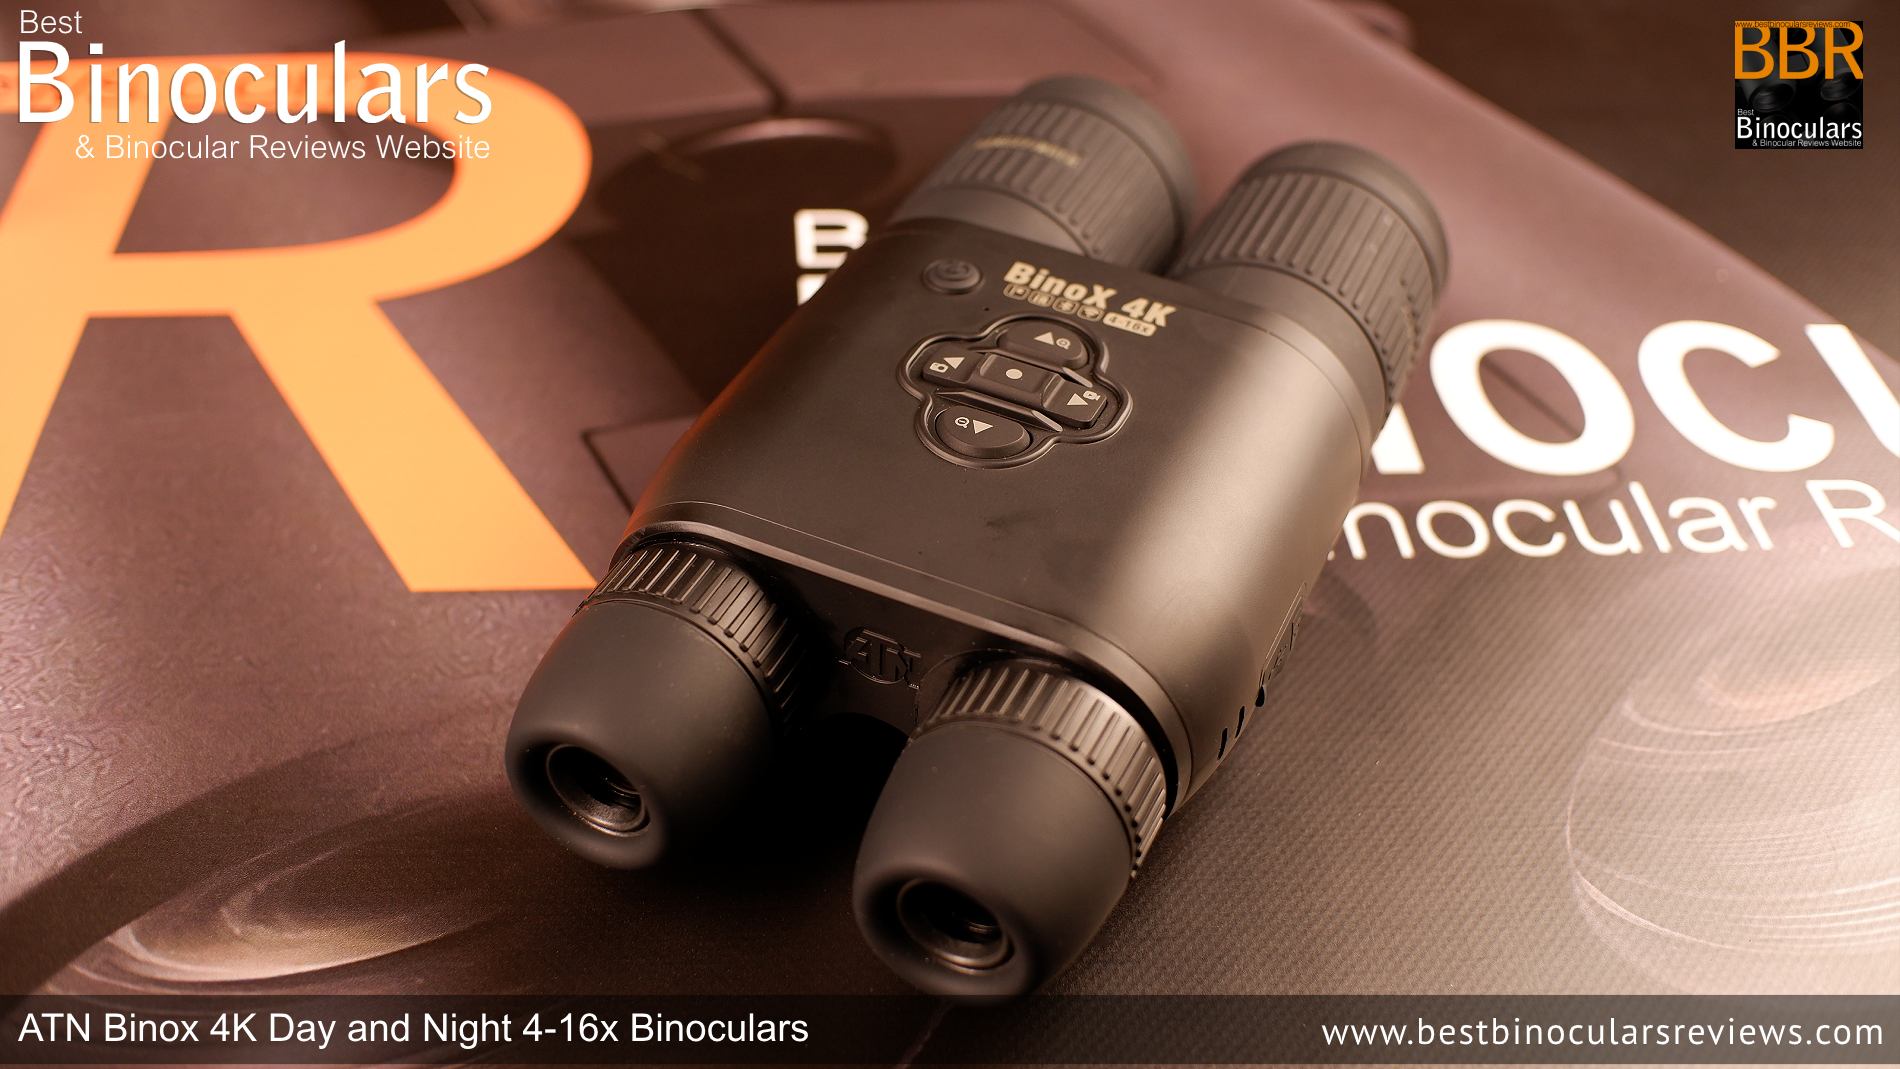 ATN Binox 4K Day and Night 4-16x Binoculars